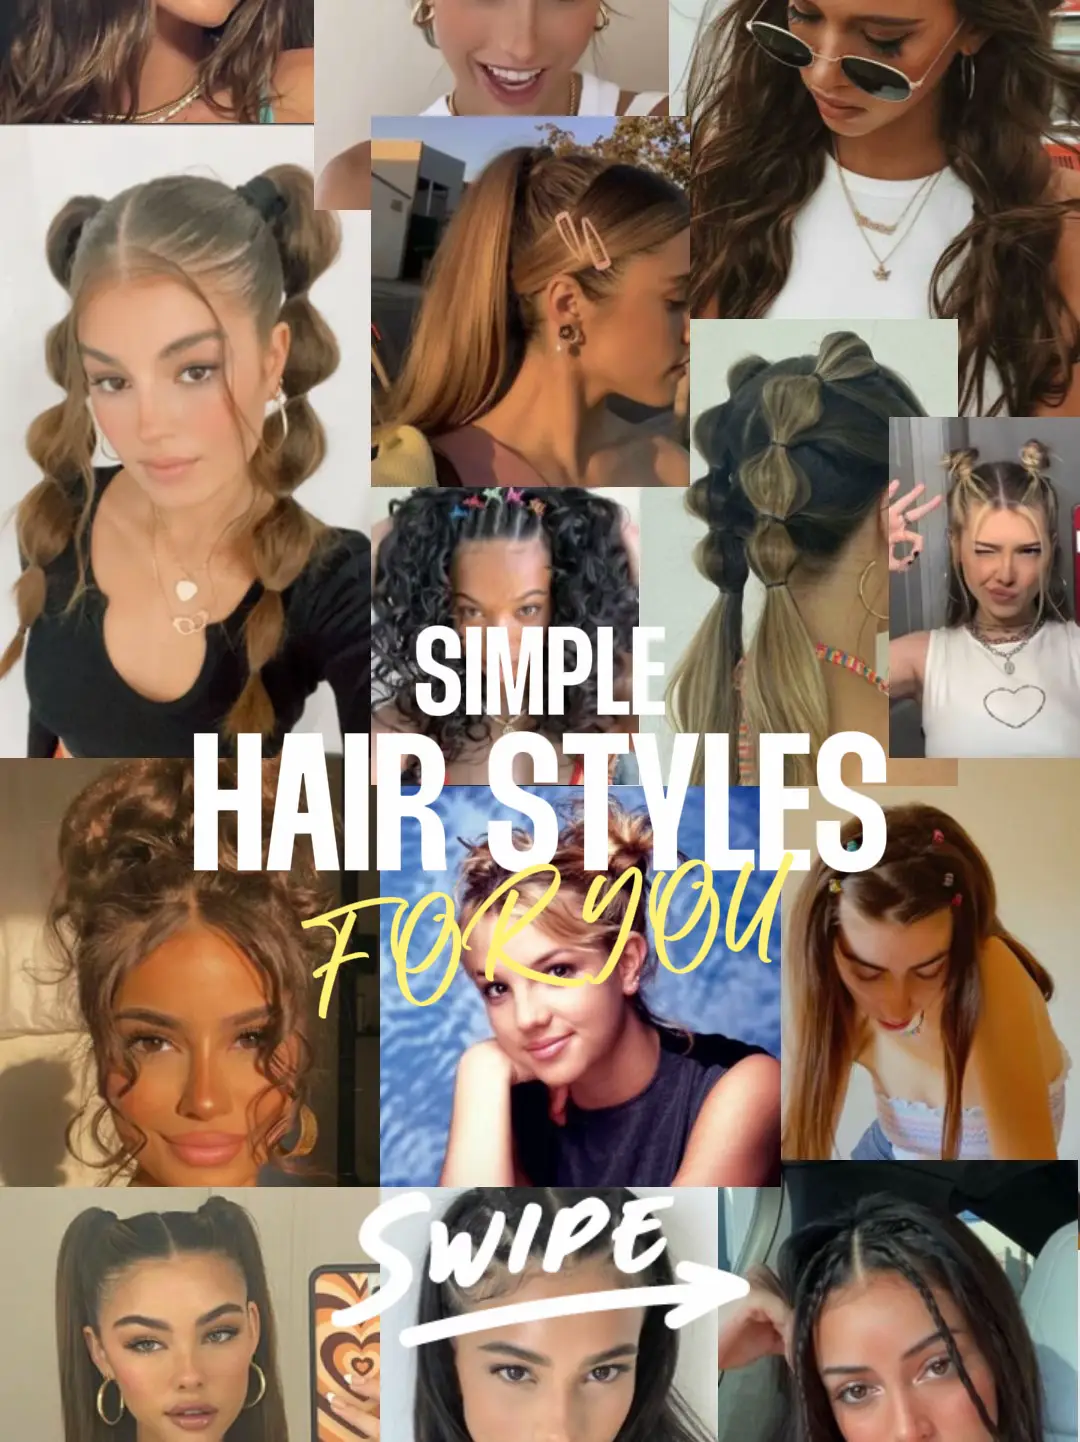 BOHO BRAIDS w/ extensions tutorial 💗 short messy bohemian box braids  trending summer hairstyle 